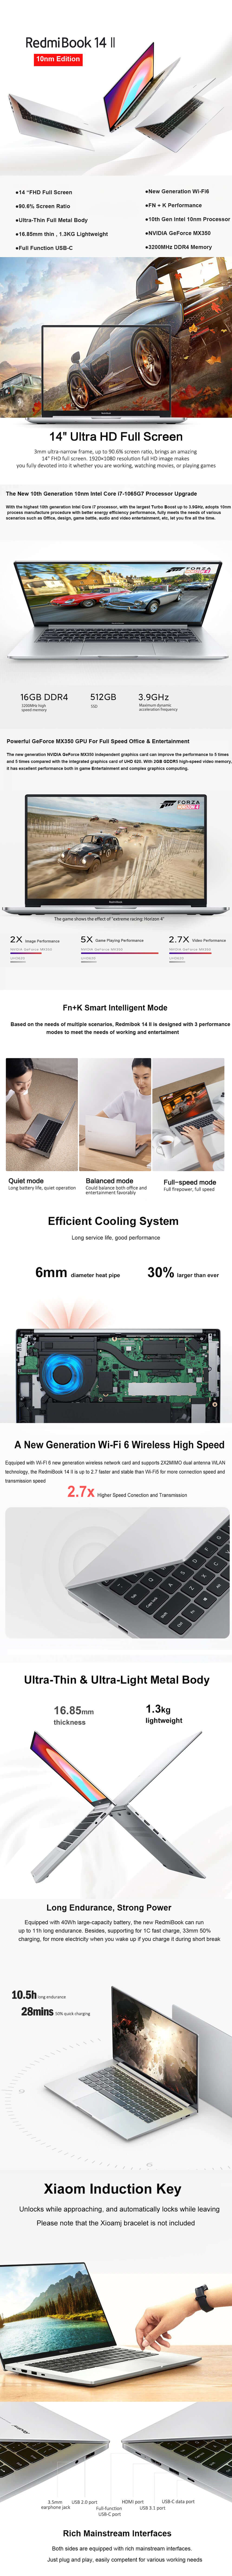 Xiaomi RedmiBook 14 Laptop II 14 inch Intel i7-1065G7 NVIDIA GeForce MX350 16G DDR4 512GB SSD 91% Ratio 100%sRGB WiFi 6 Full-featured Type-C Notebook 13